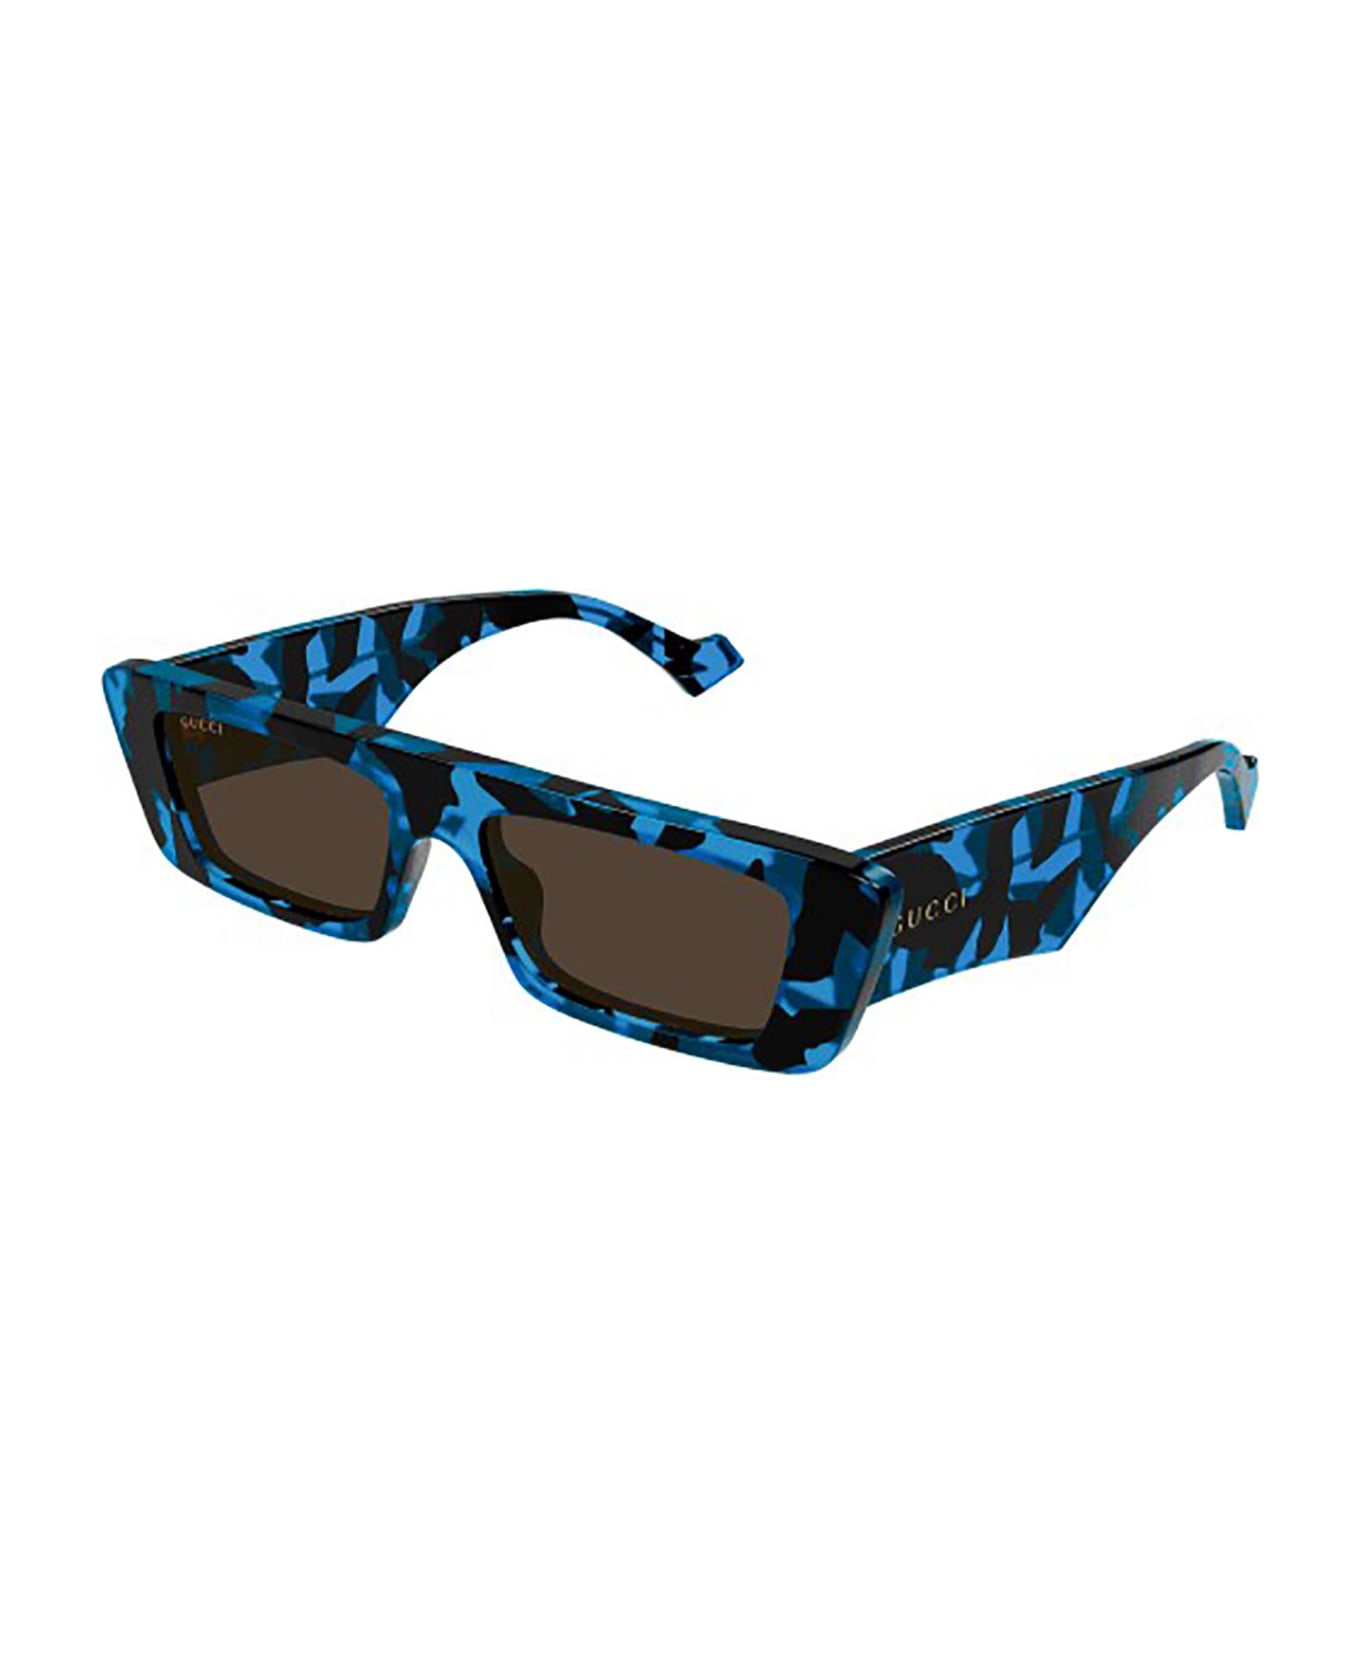 Gucci Eyewear Gg1331s Sunglasses - HAVANA-HAVANA-BROWN サングラス